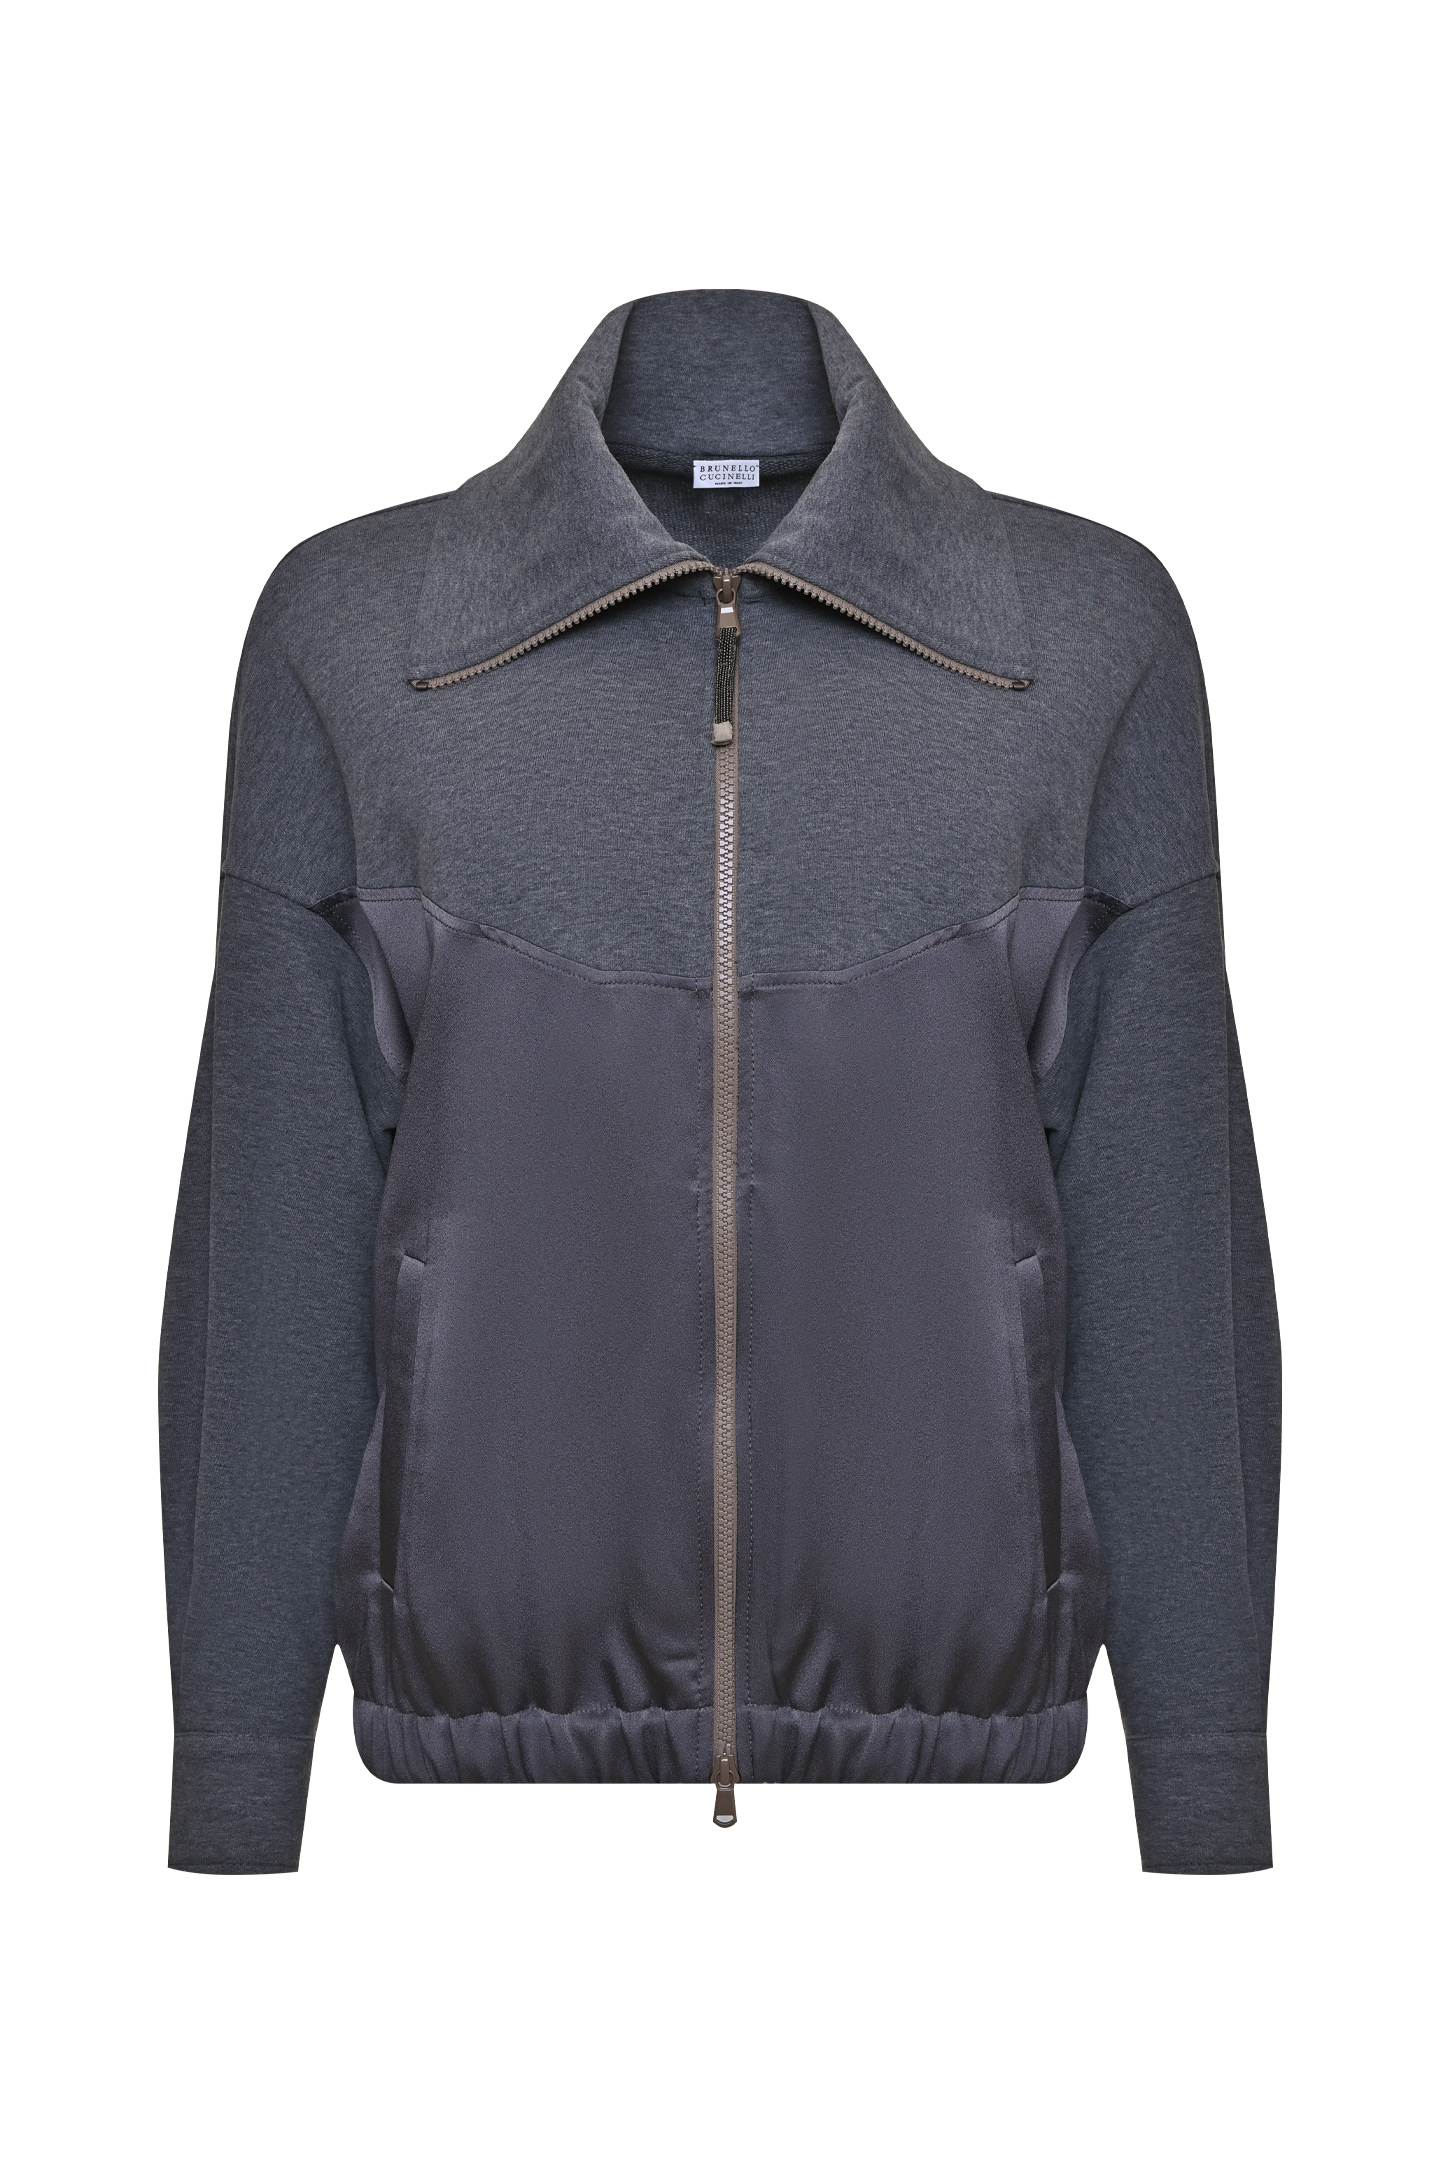 Куртка спорт BRUNELLO  CUCINELLI MP05NSG706, цвет: Серый, Женский